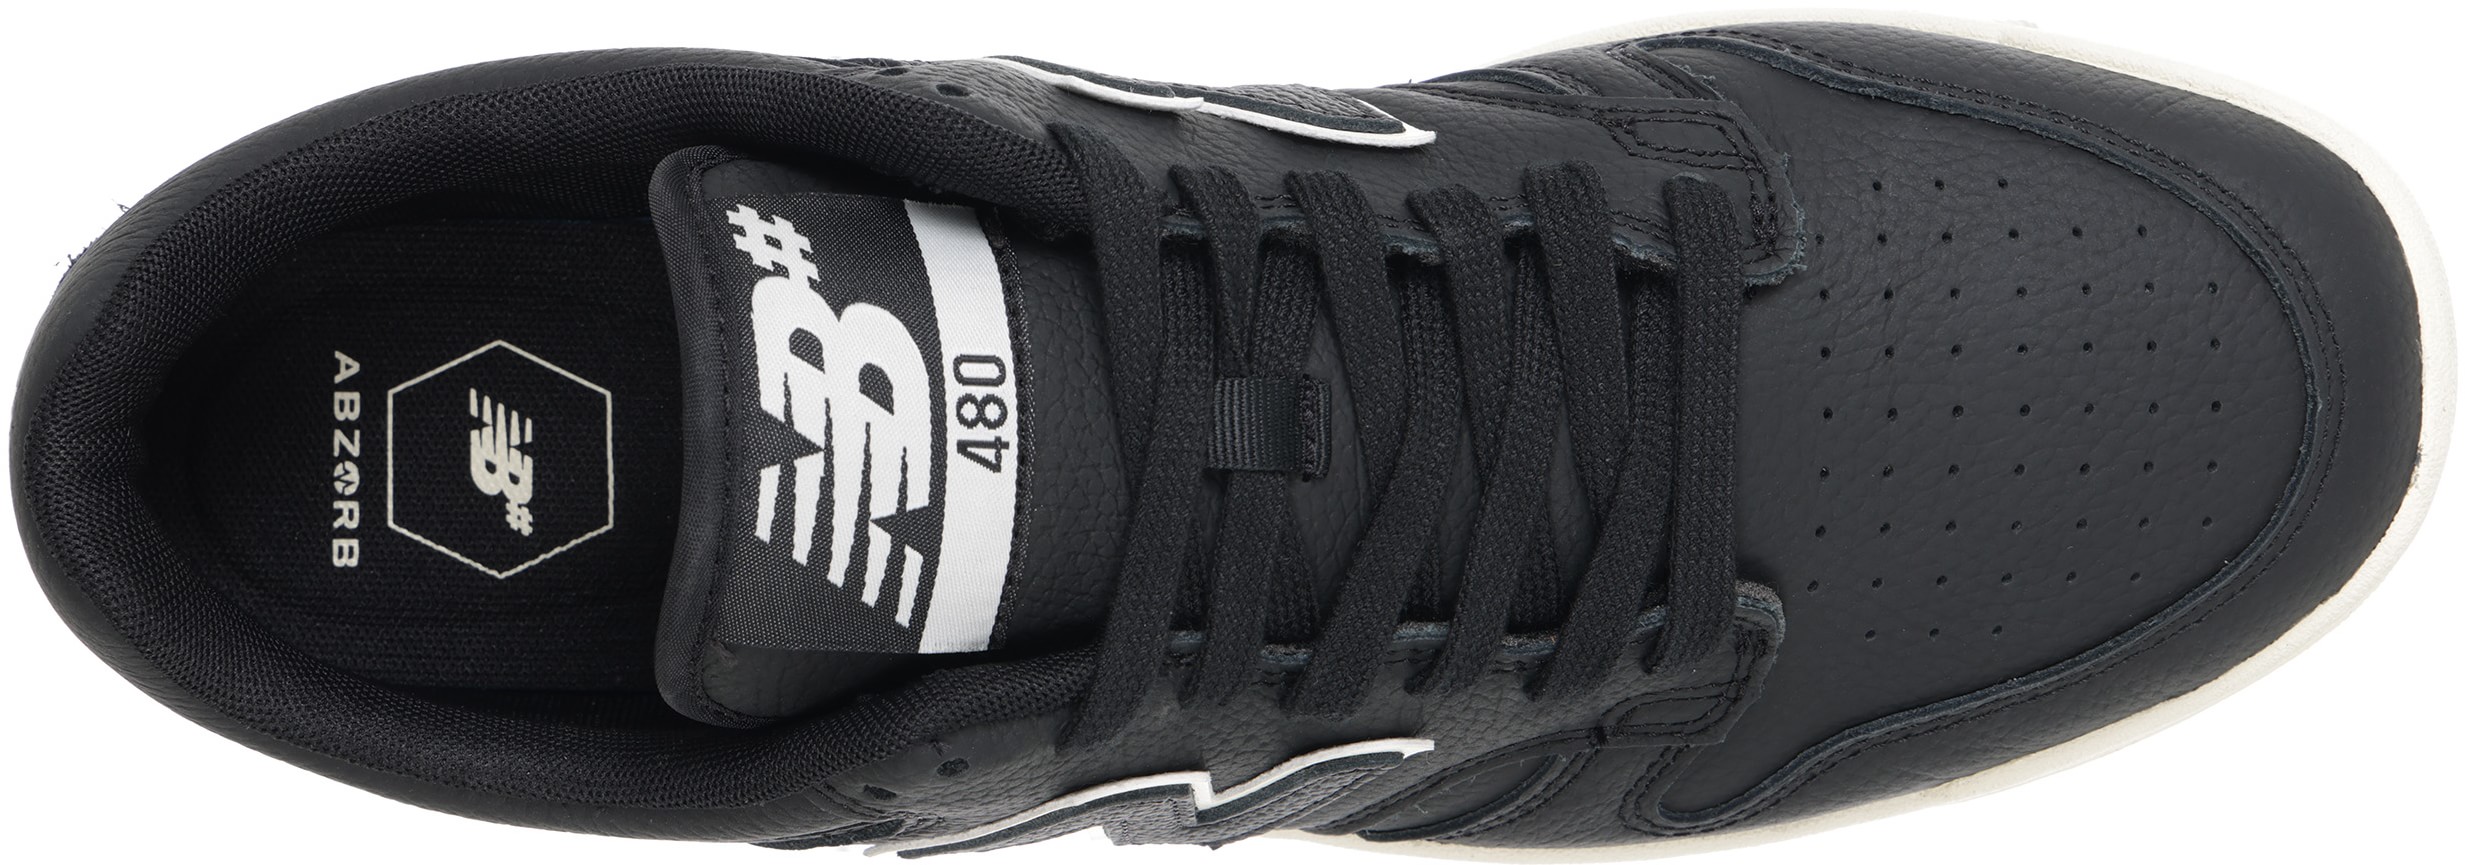 New Balance Numeric 480 Skate Shoes - black/white | Tactics